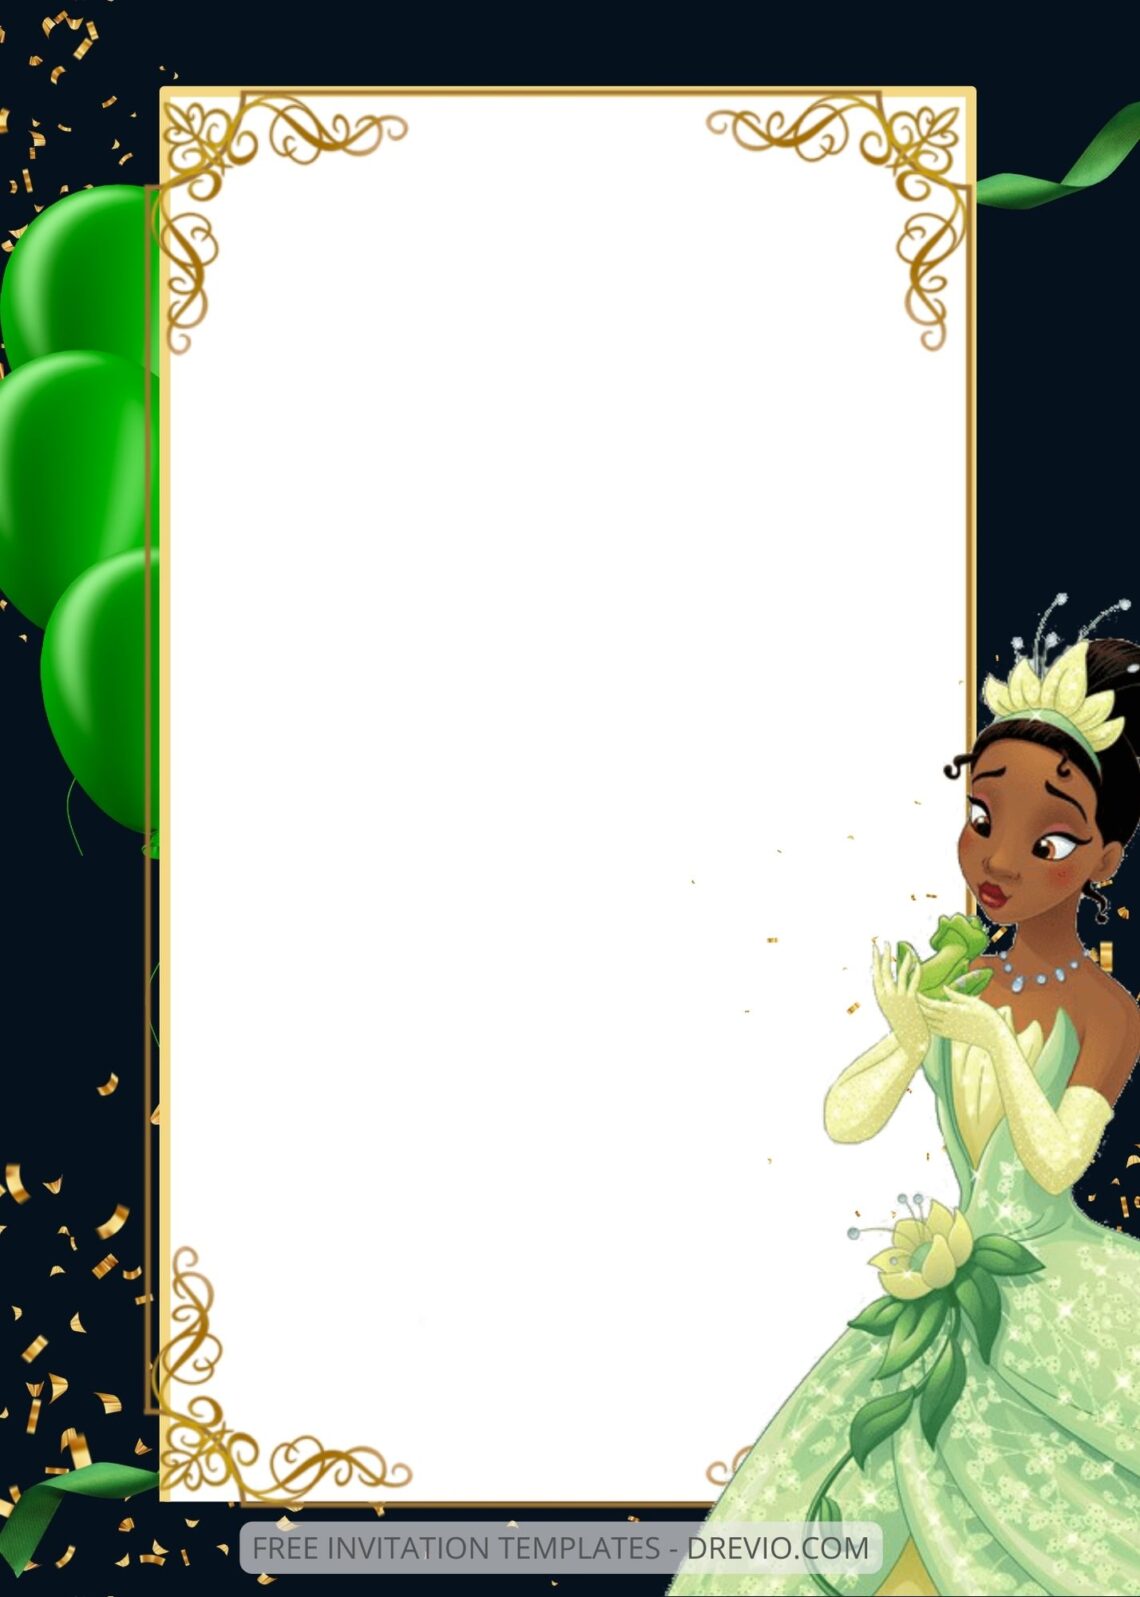 FREE EDITABLE - 9+ Princess Tiana Canva Birthday Invitation Templates Two